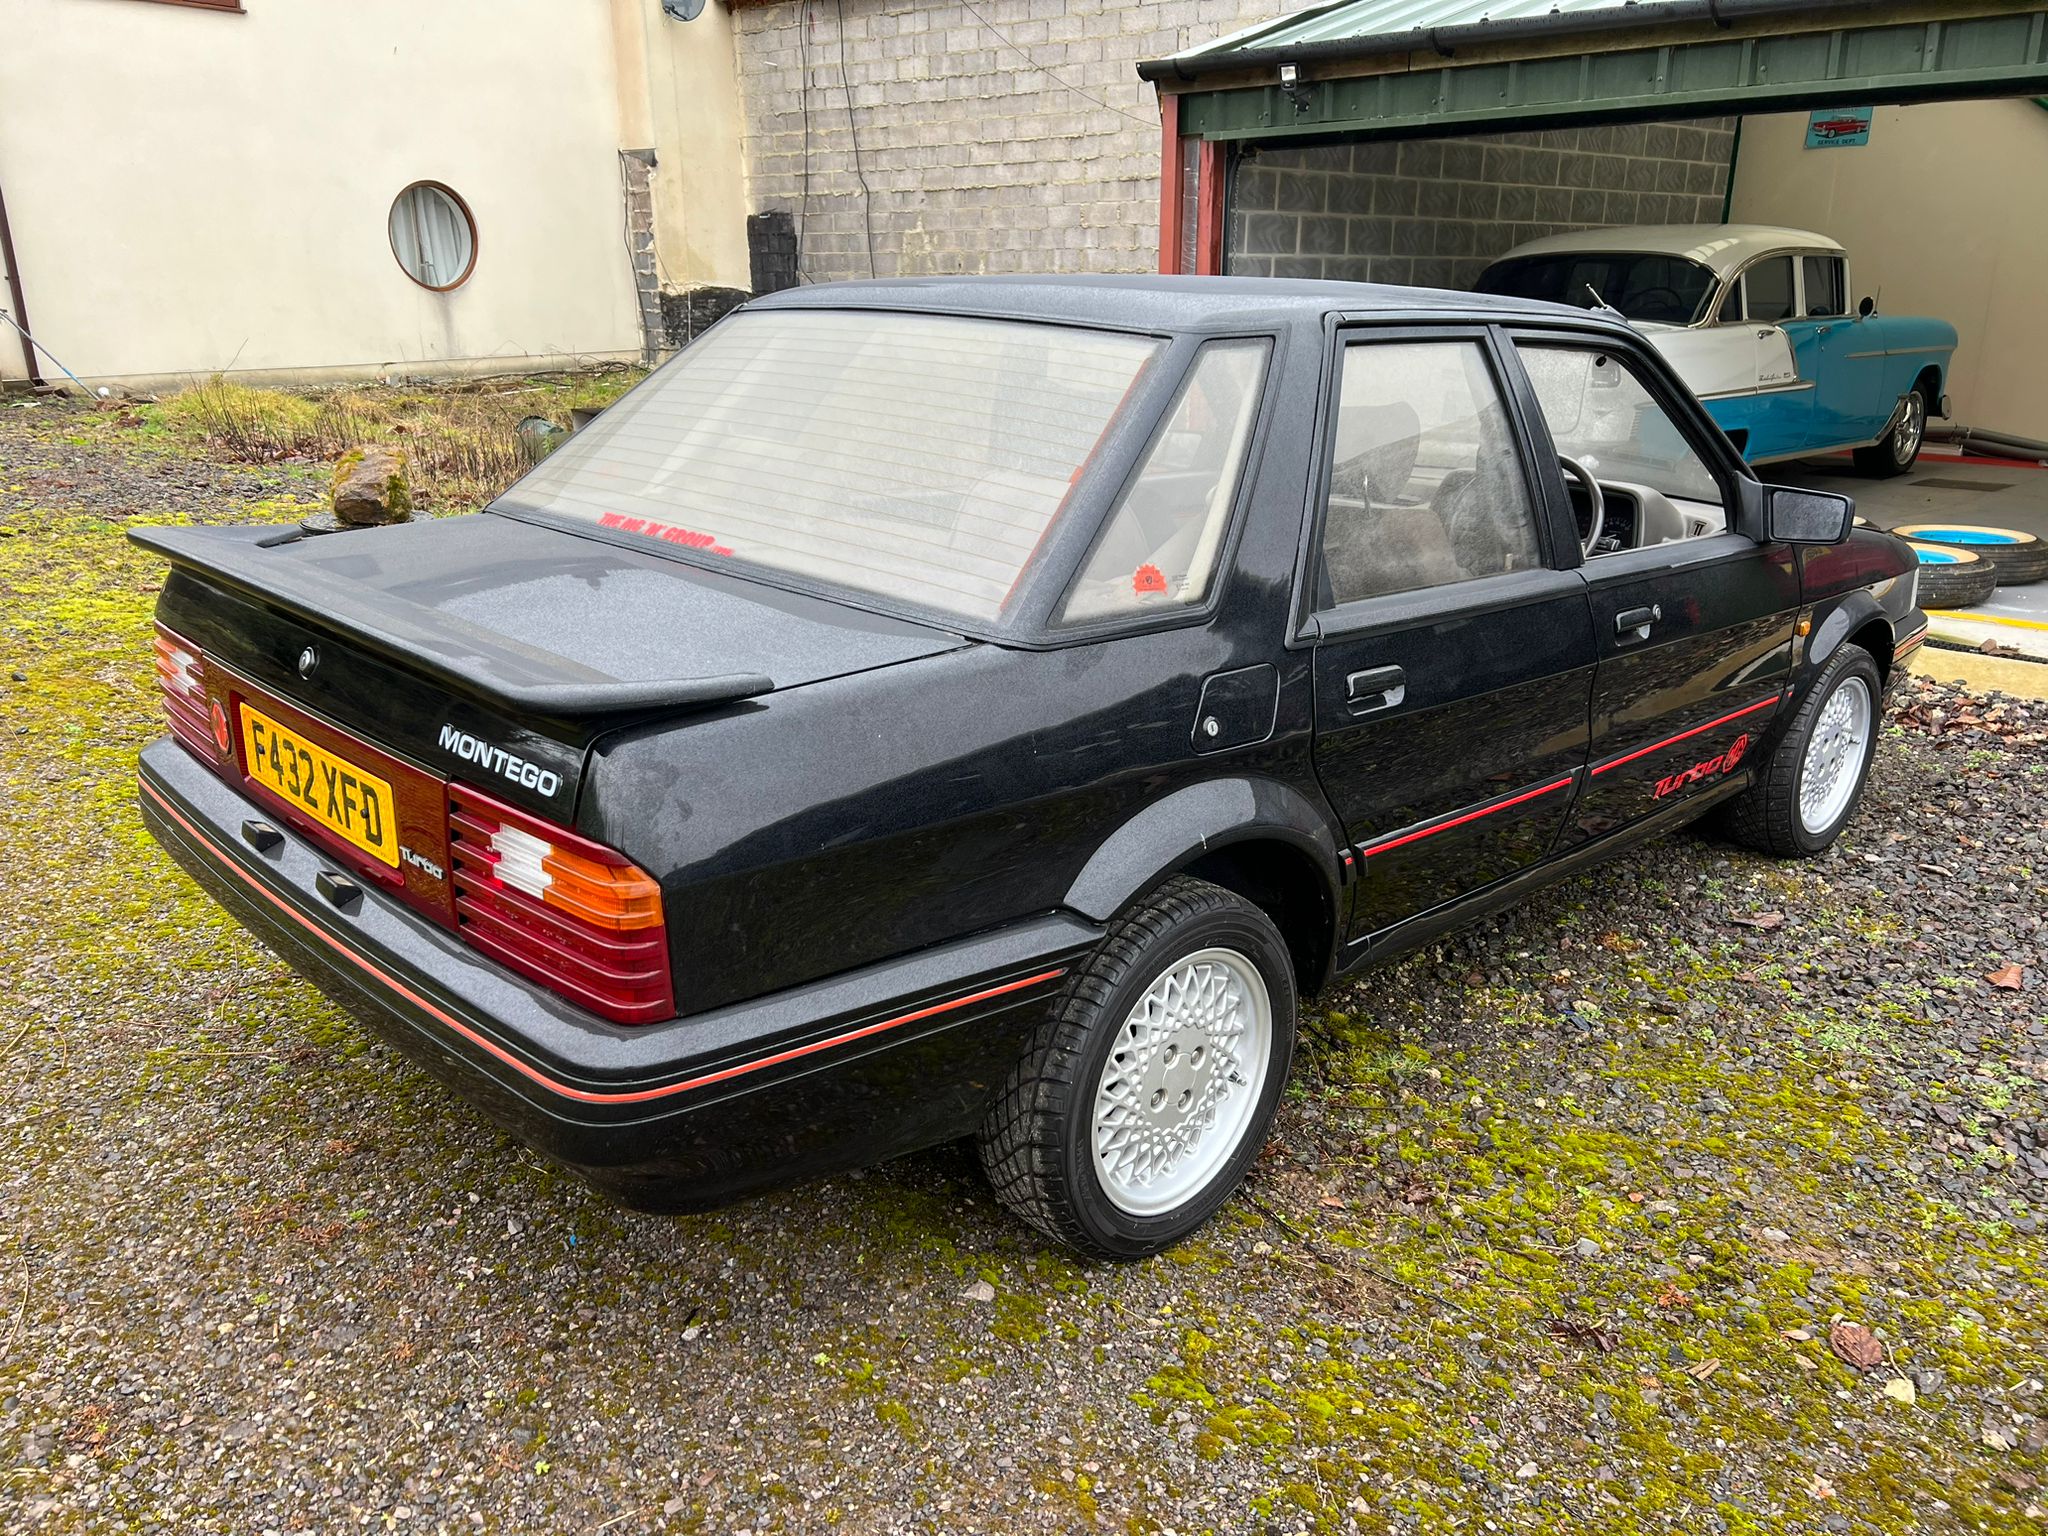 MG Montego Turbo 1988 - Image 2 of 14